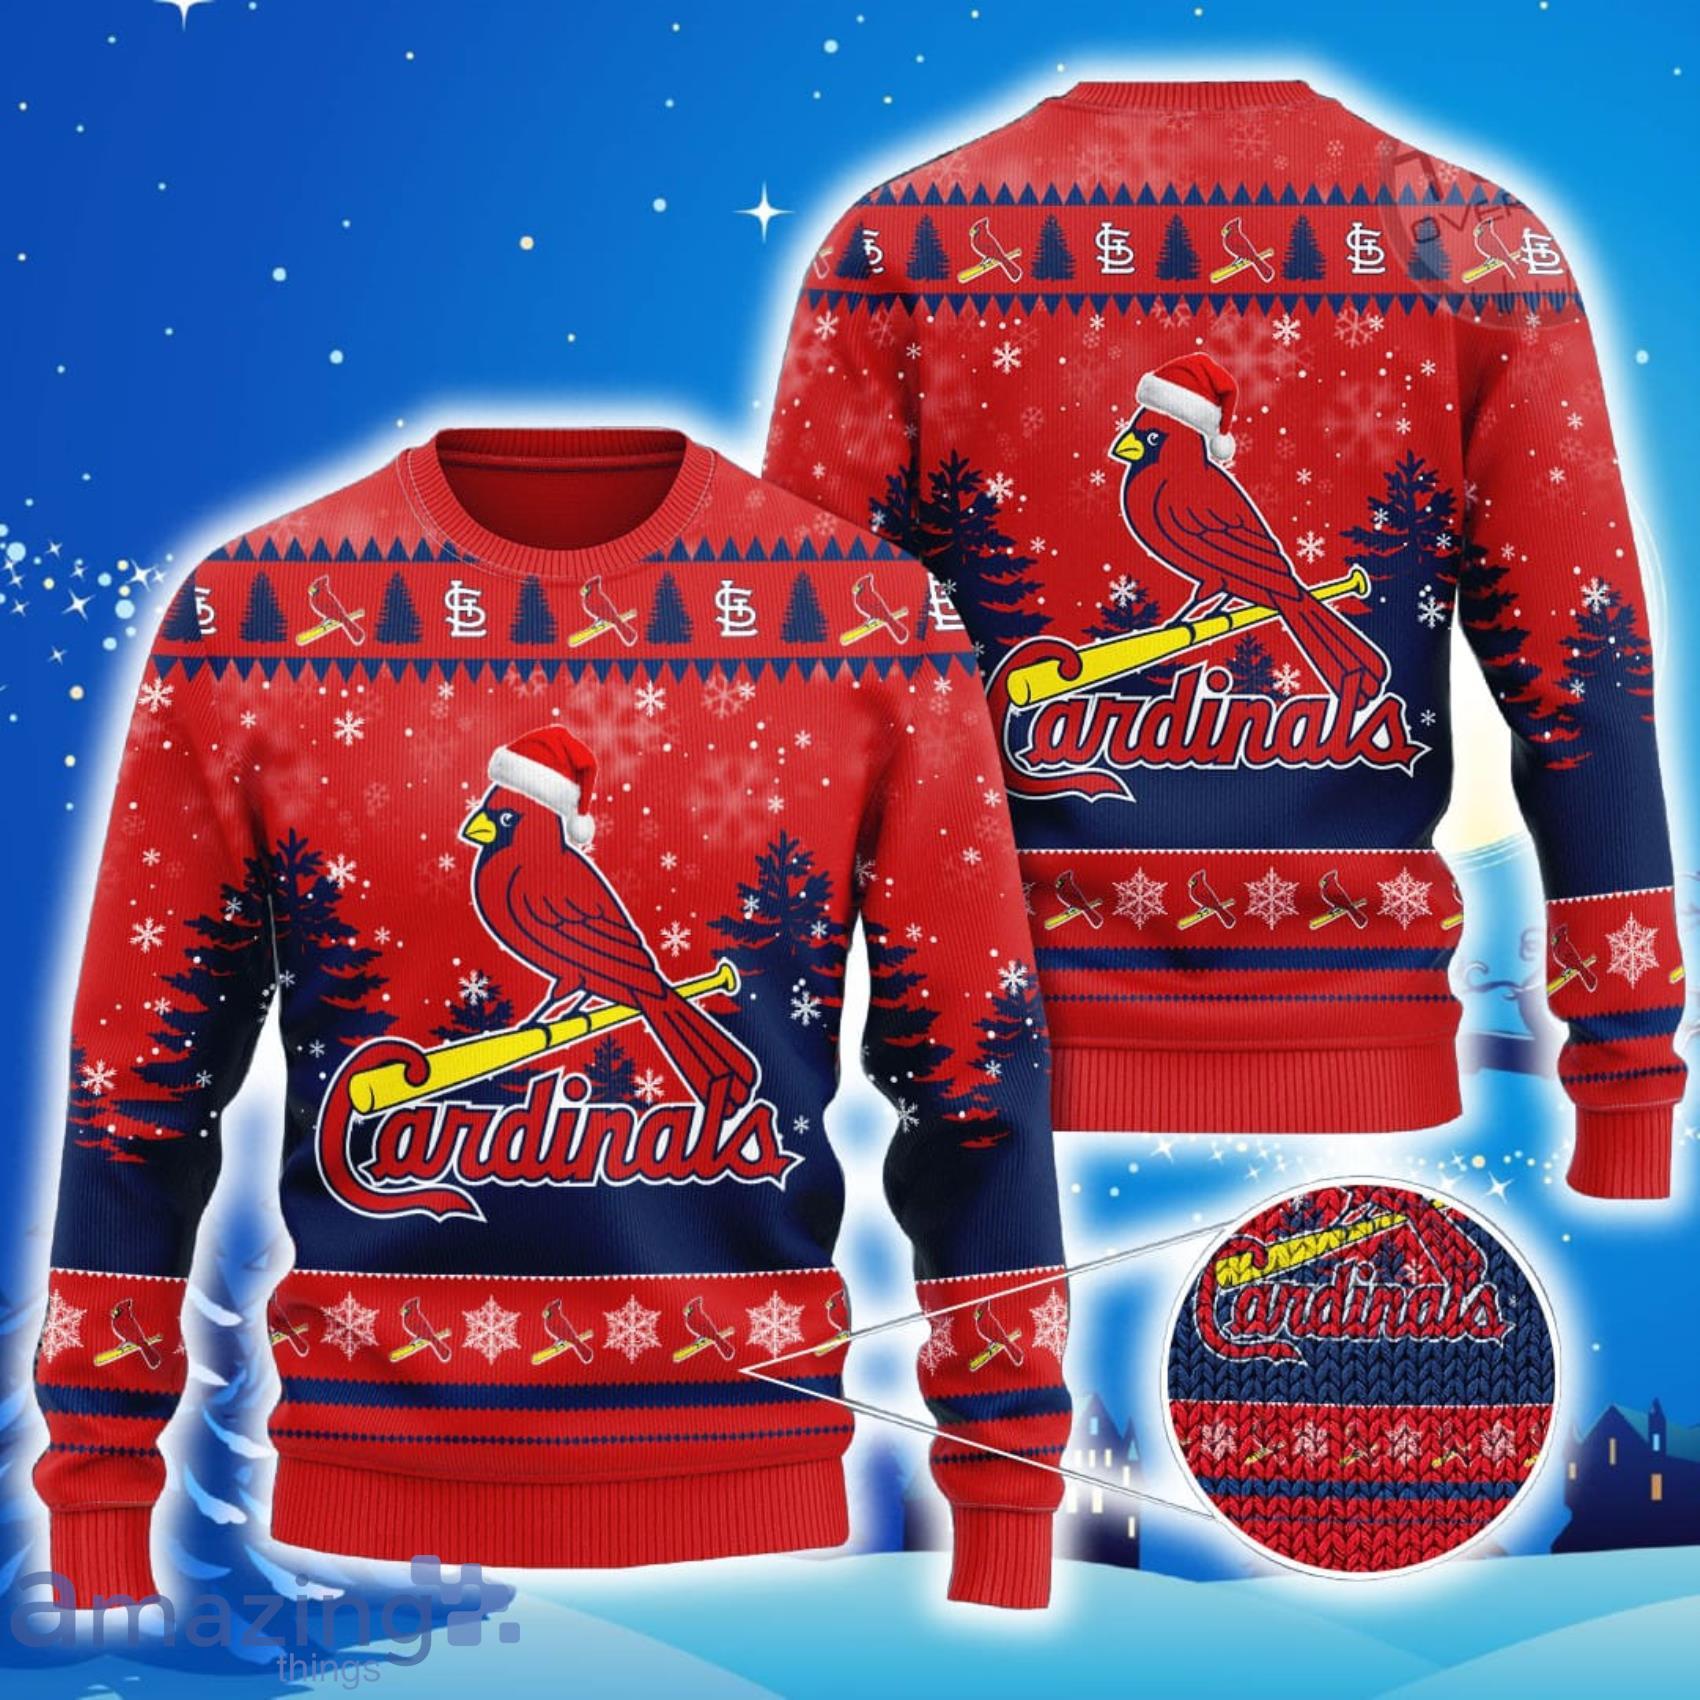 St Louis Cardinals Care Winter Warm-Up 2023 Christmas shirt